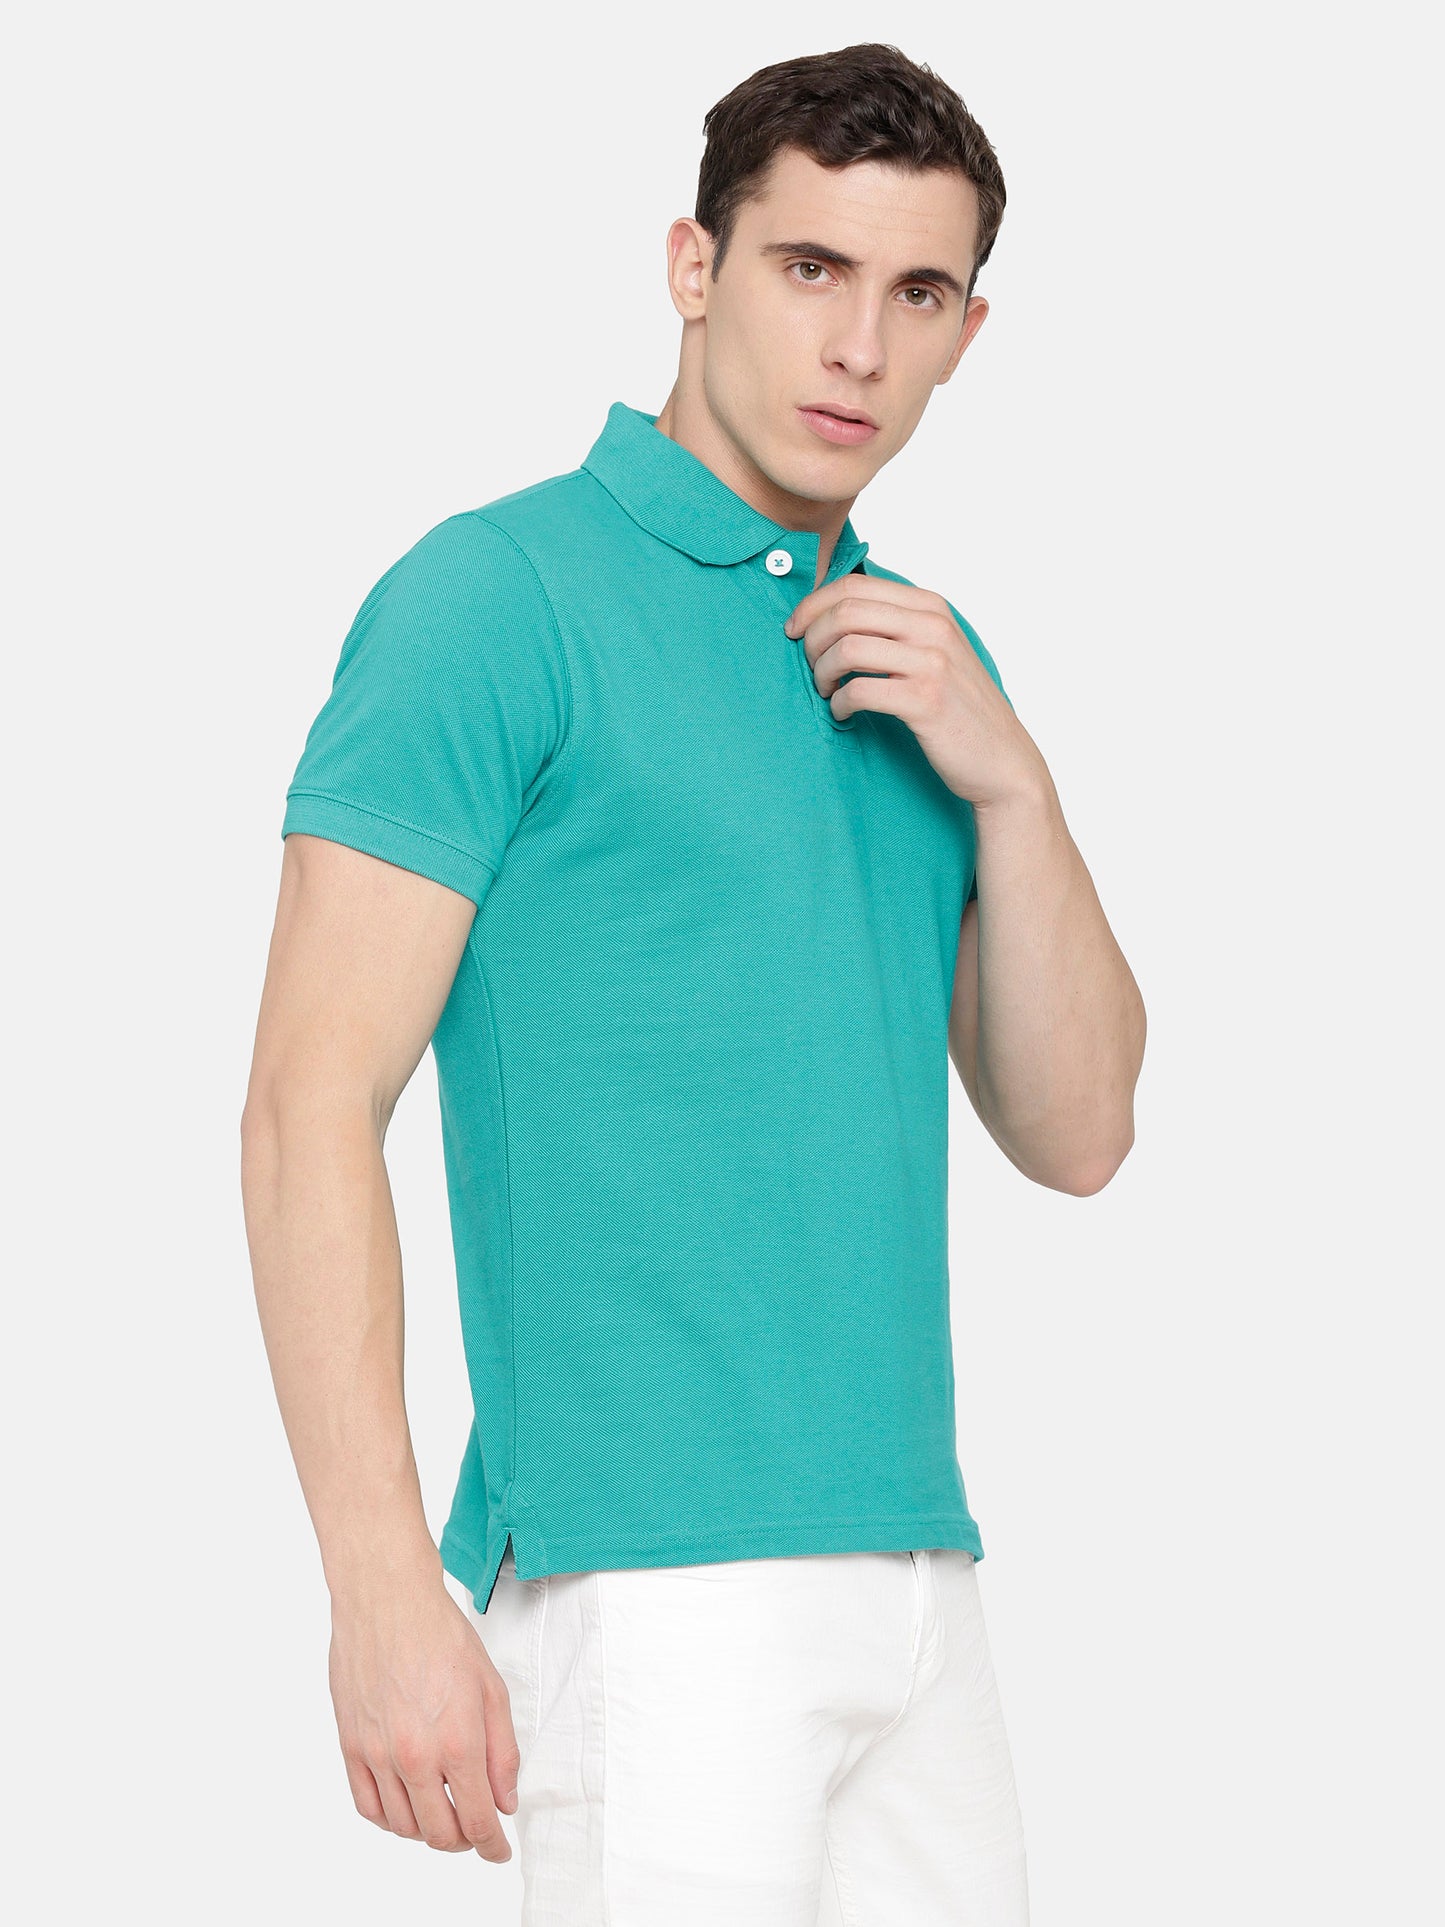 Slim Fit Aqua Green Polo T-Shirt in pique fabric